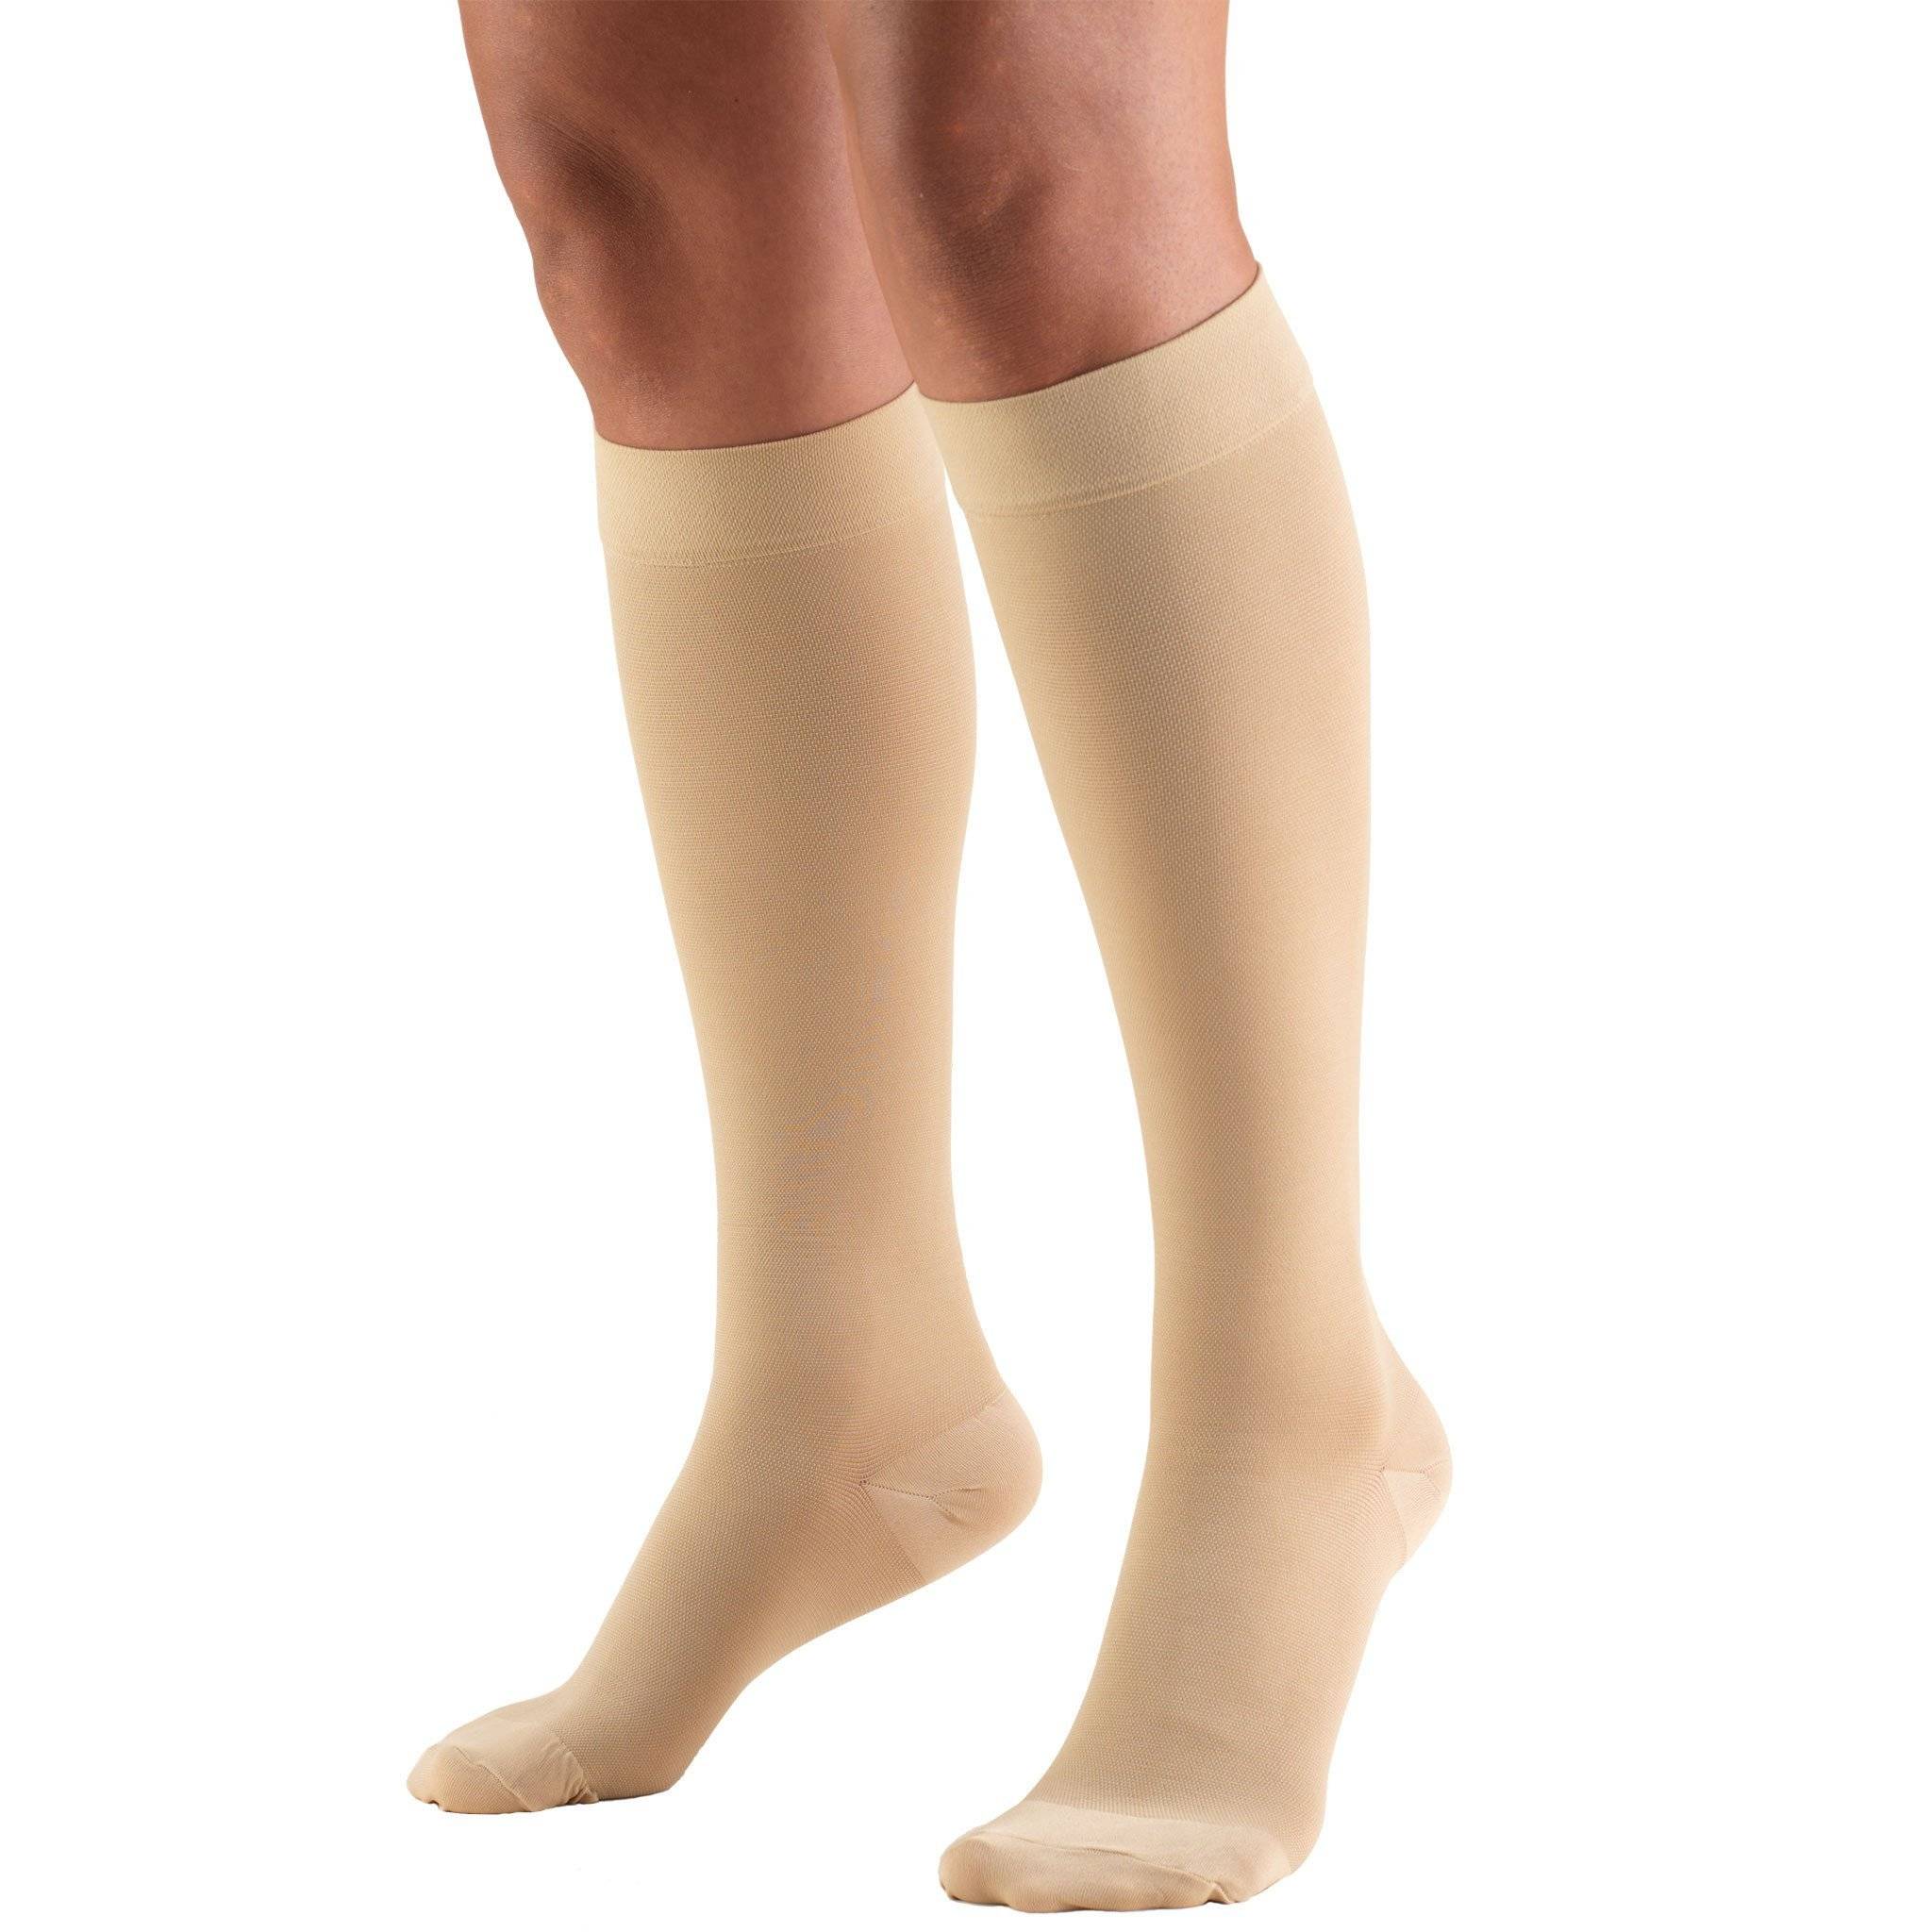 Knee High Medical Stockings